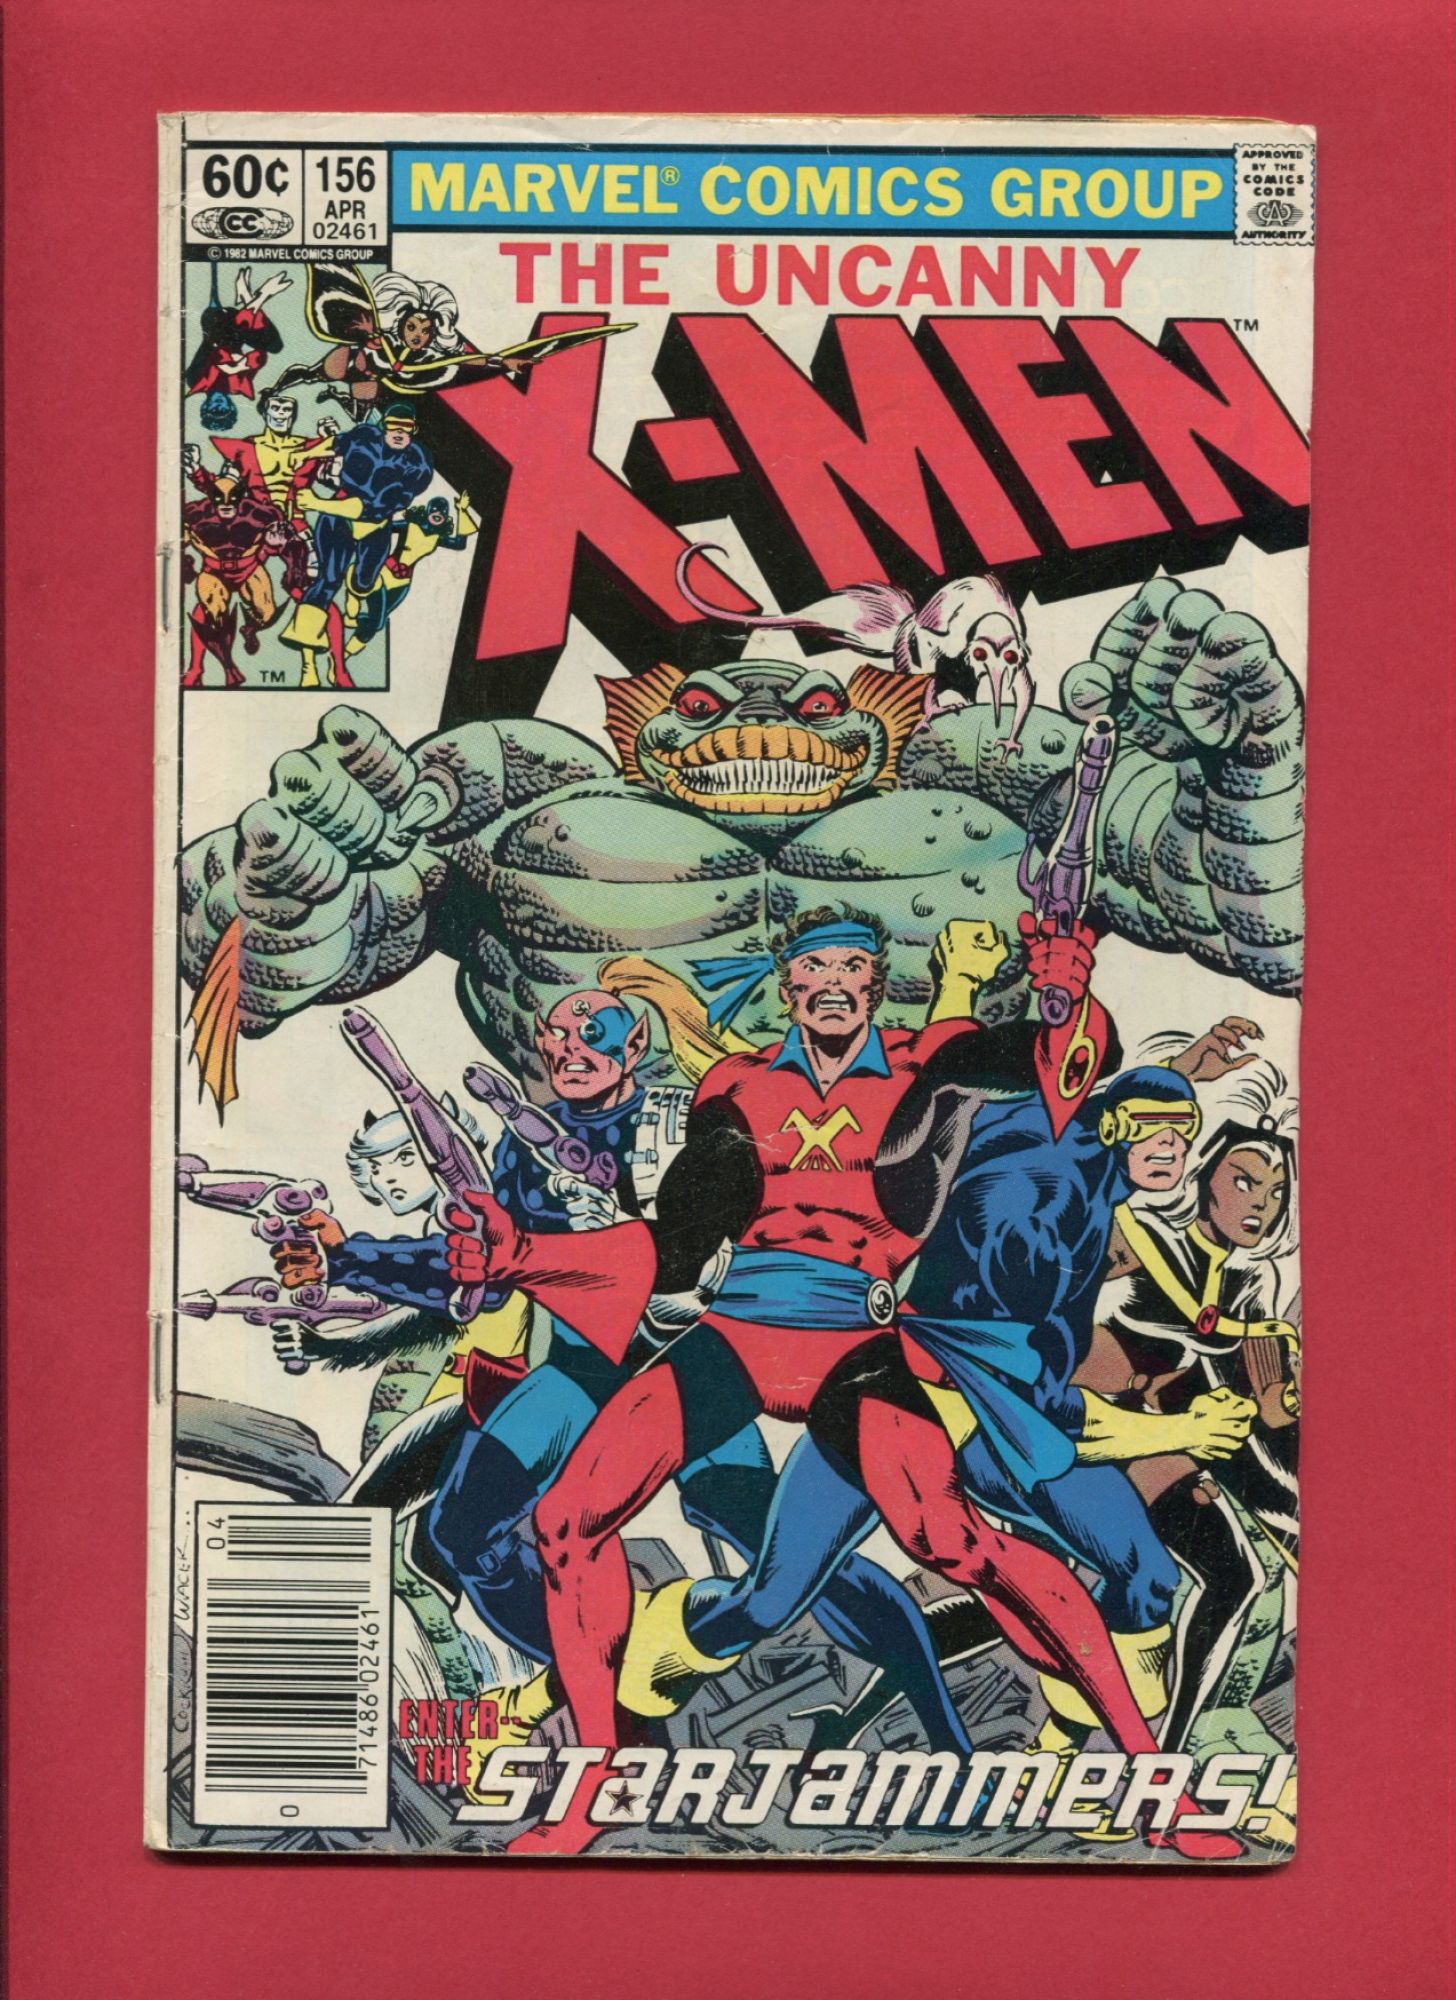 Uncanny X-Men #156, Apr 1982, 4.0 VG